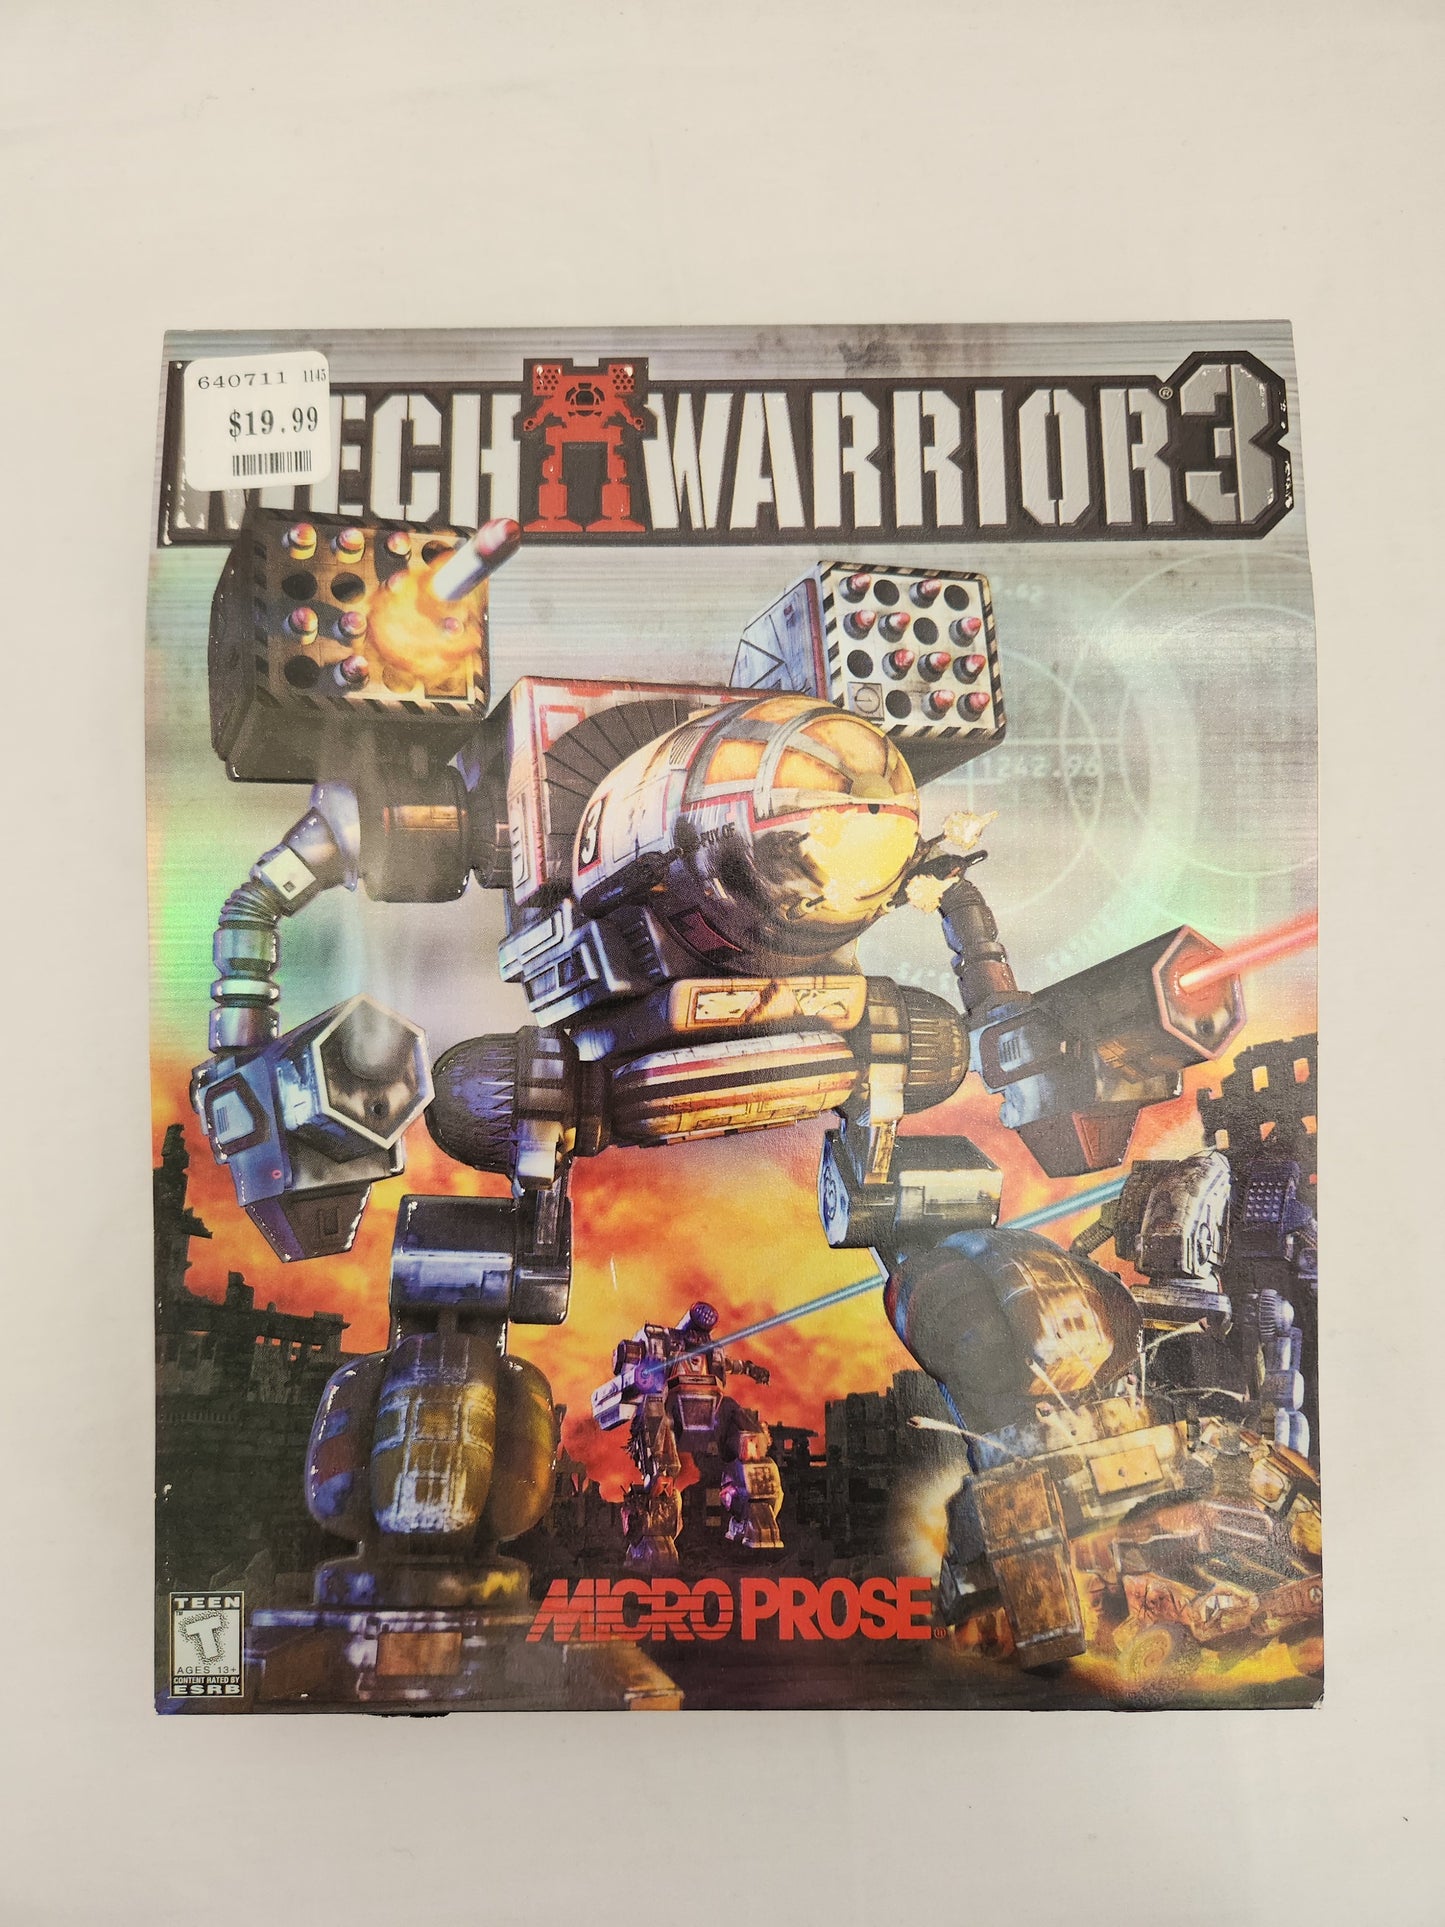 Mech Warrior 3 Big Box PC CD/ROM Game by Microprose - Sealed (box damaged)